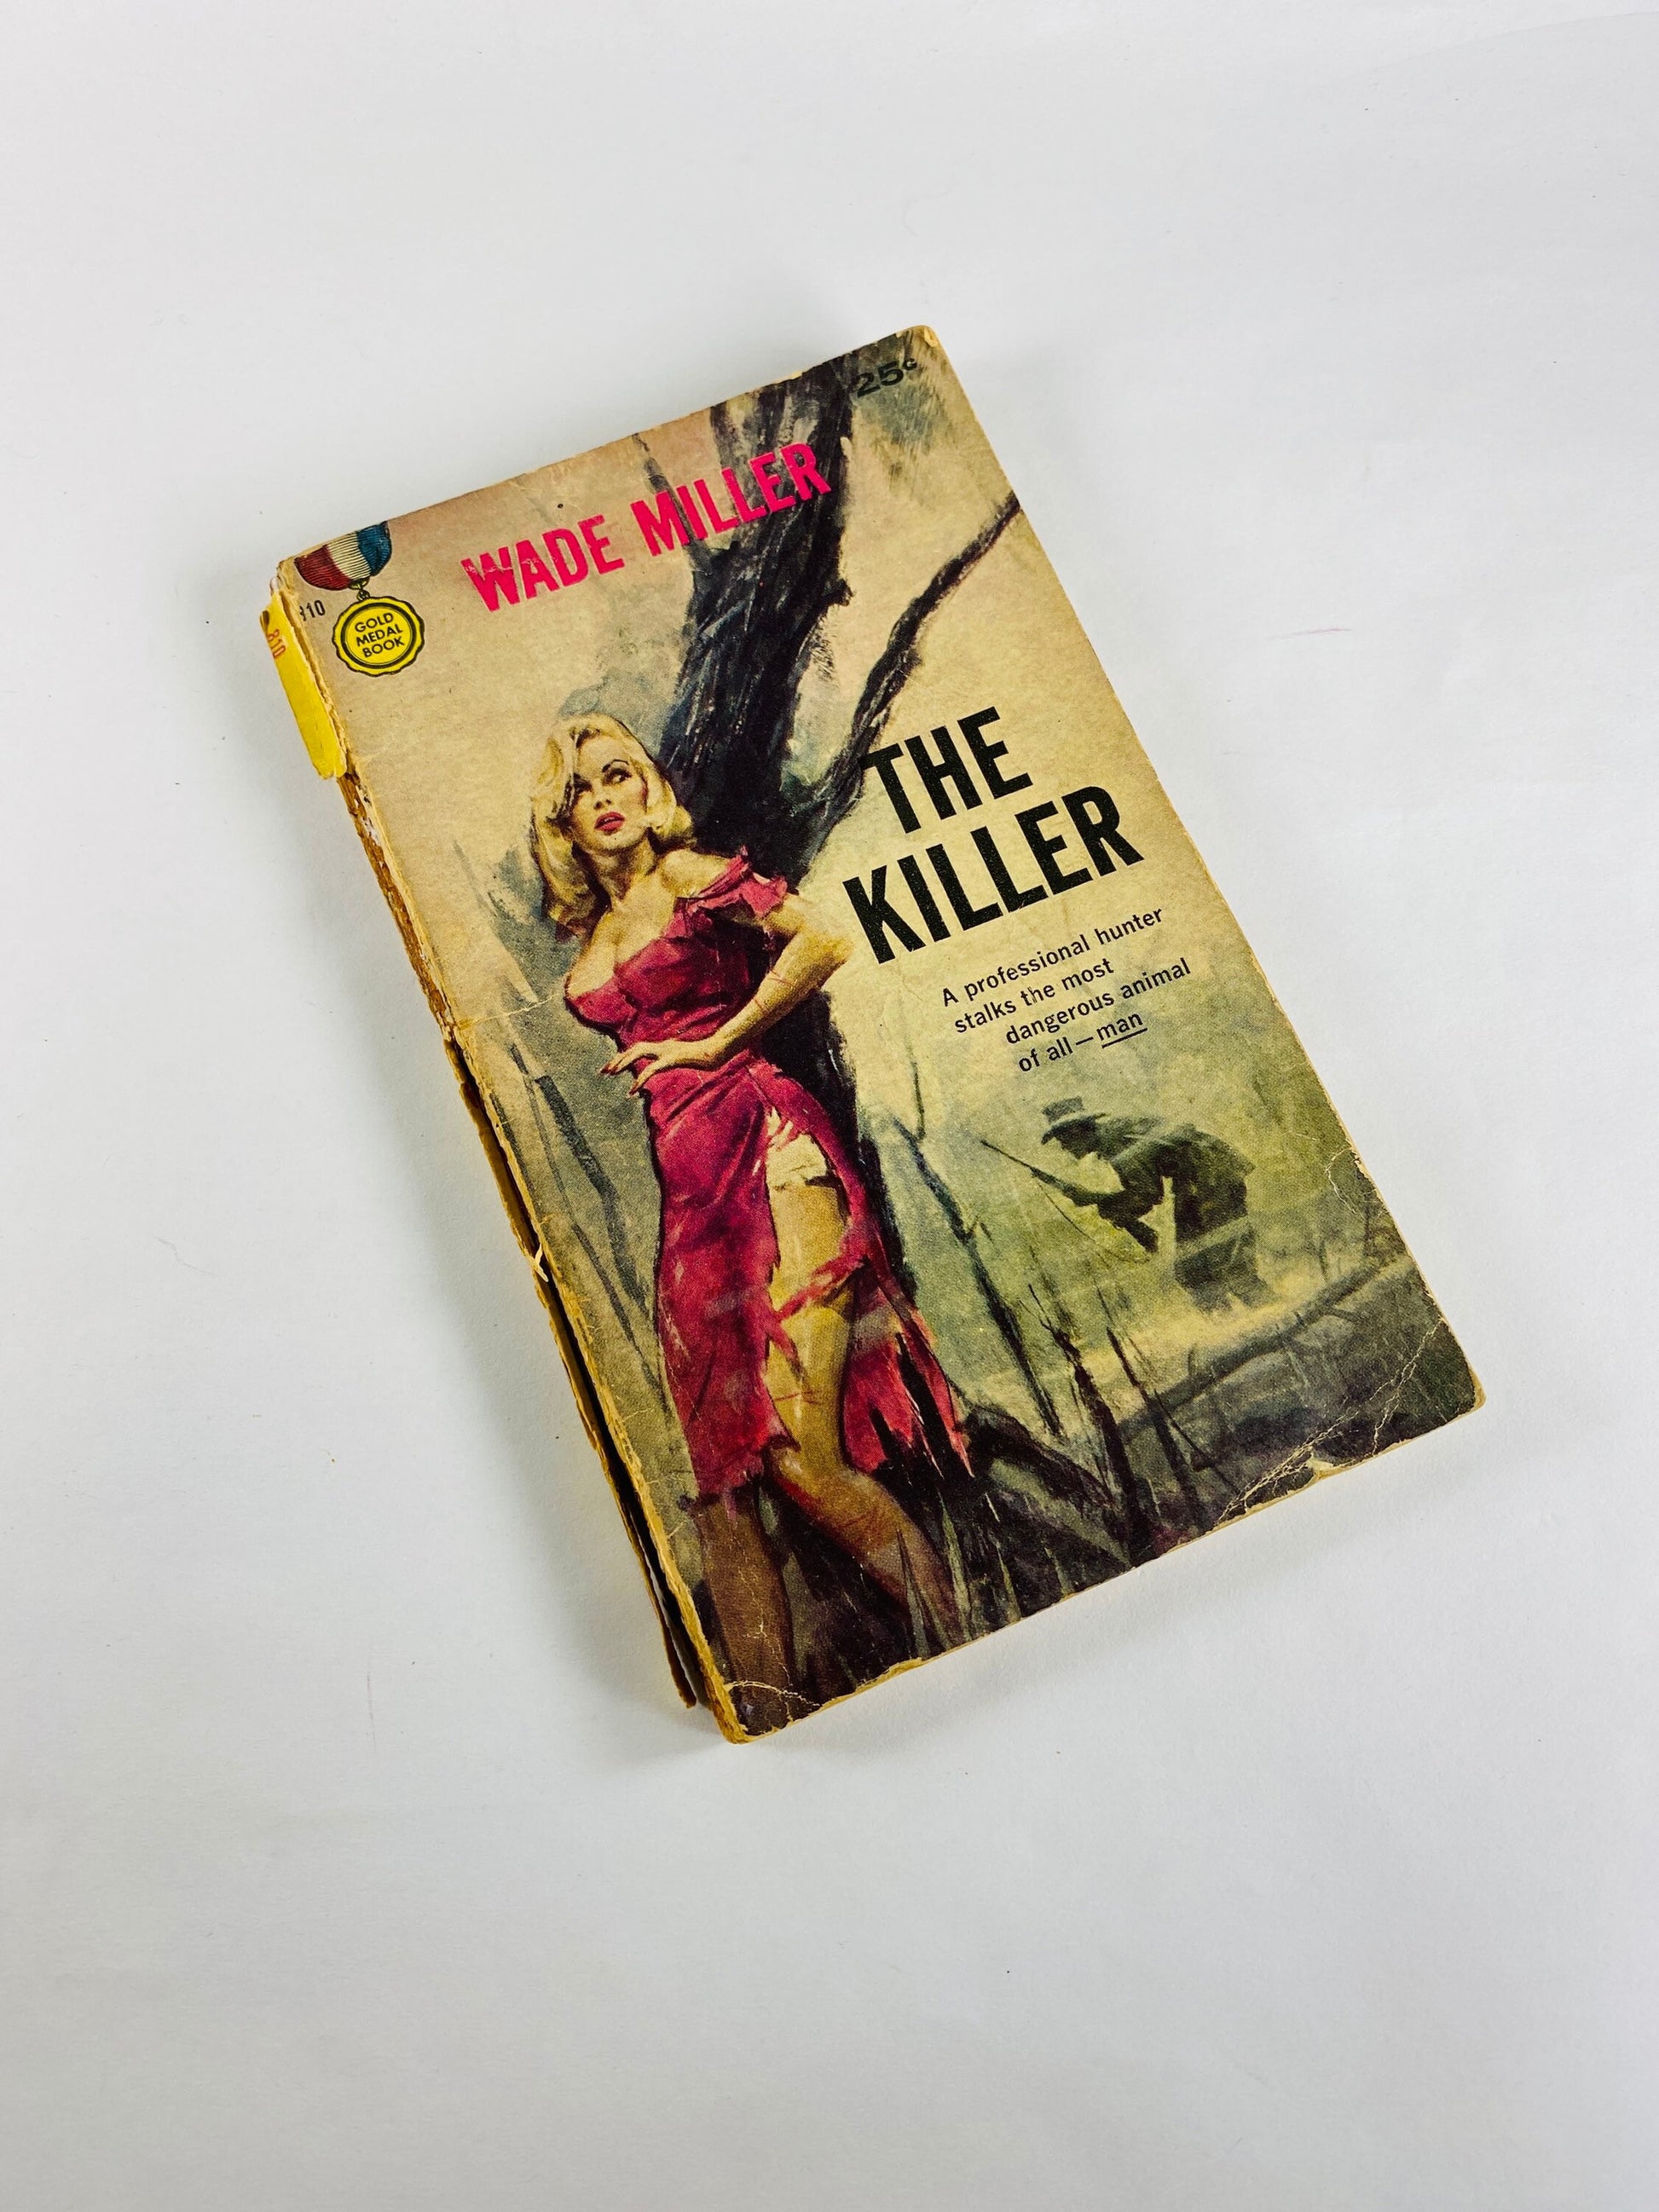 Vintage Wade Miller paperback book 1950s- 1960s erotica smut murder mystery crime fiction pulp